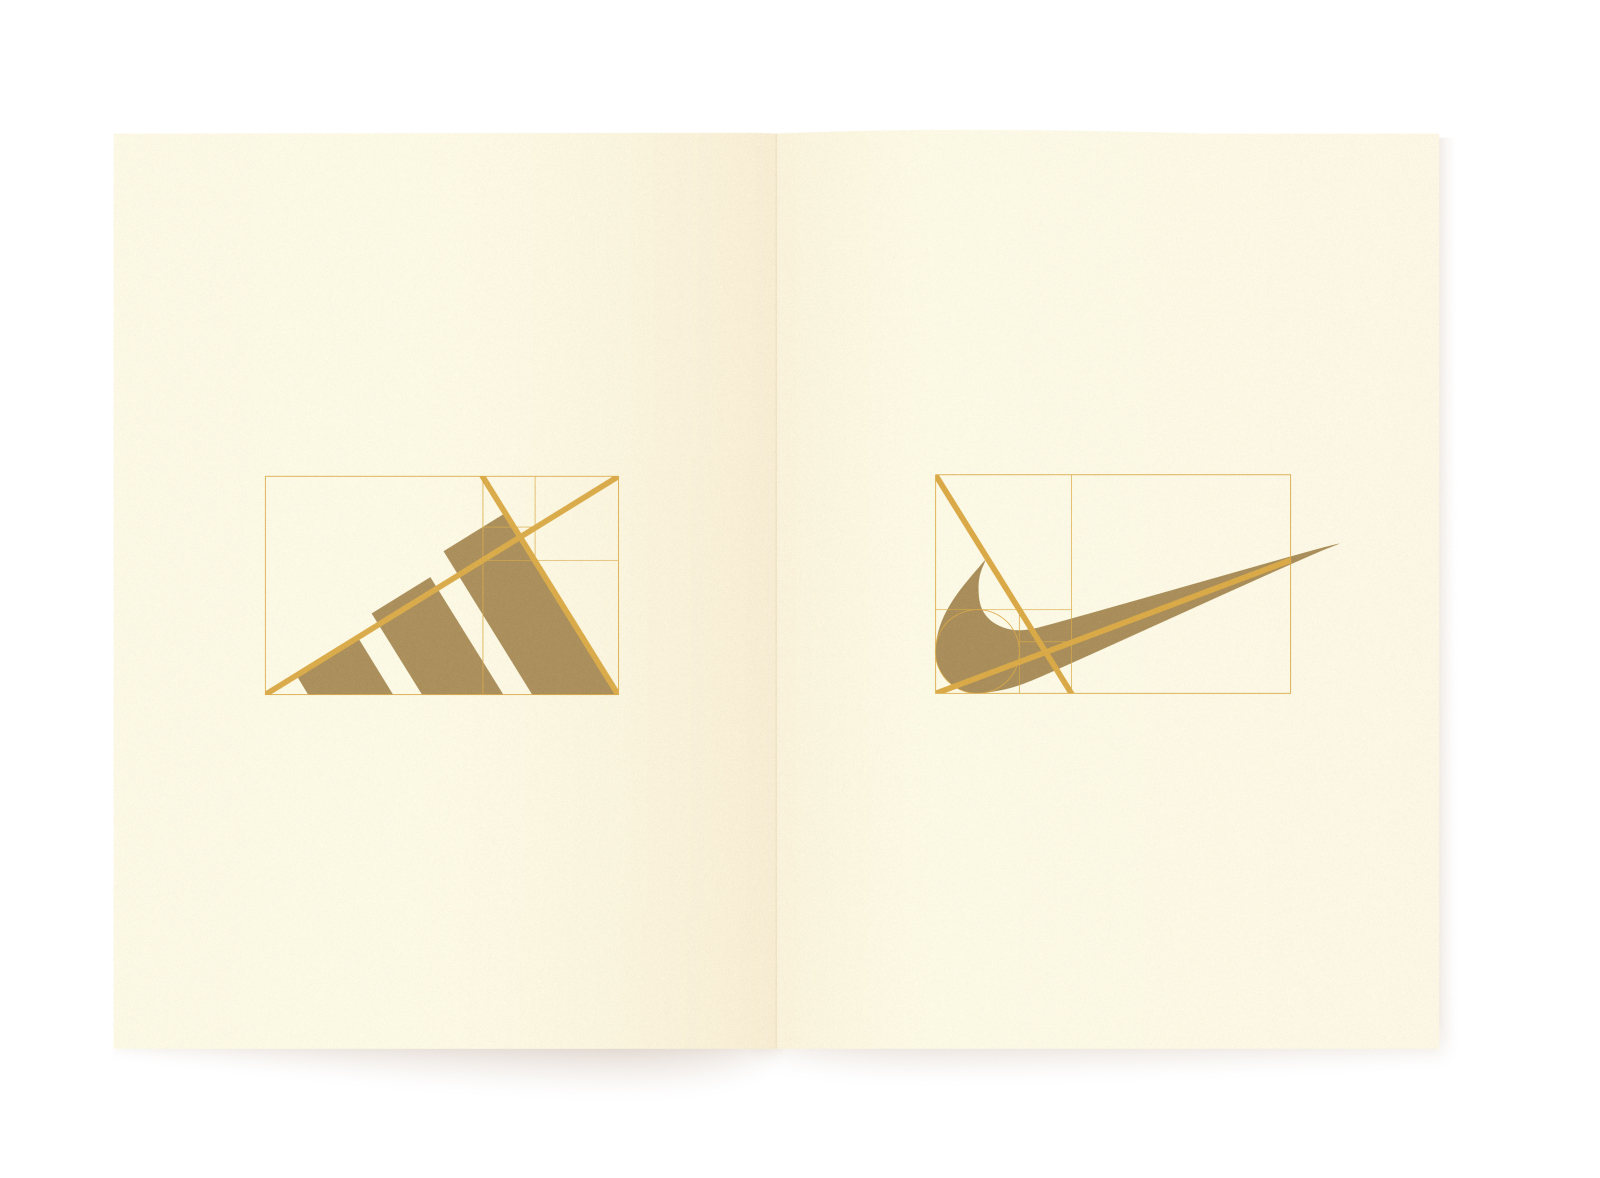 Sumergido profundamente Impermeable Adidas vs Nike vs The golden ratio by Pedro Arbelaez on Dribbble